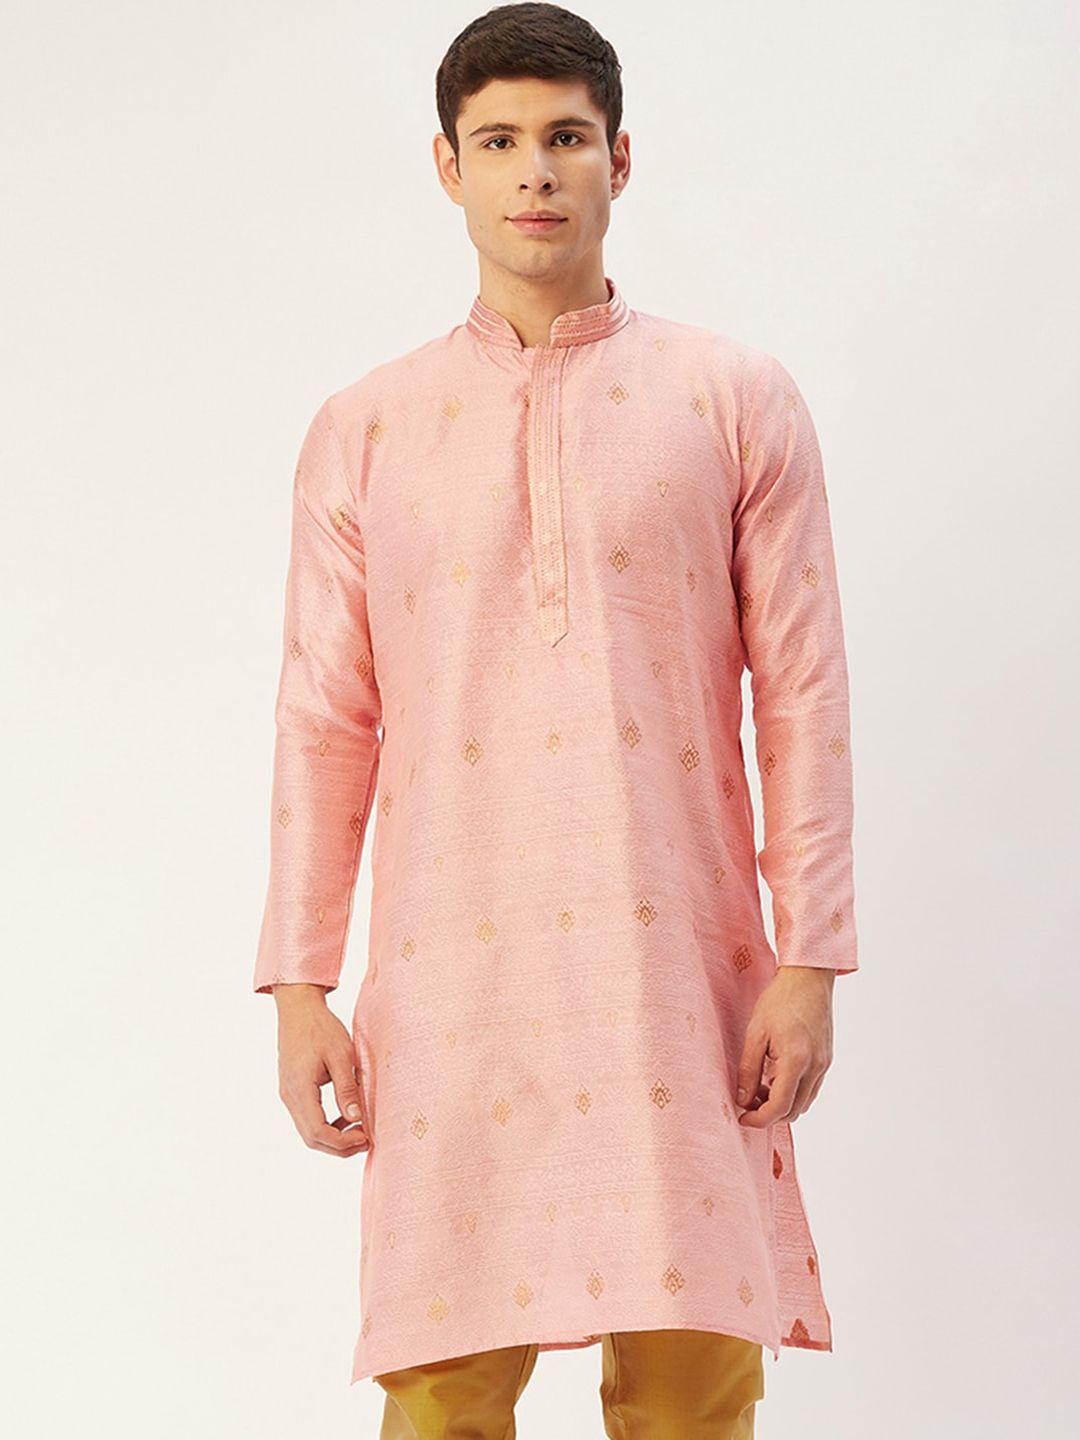 jompers-men-pink-embroidered-woven-design-kurta